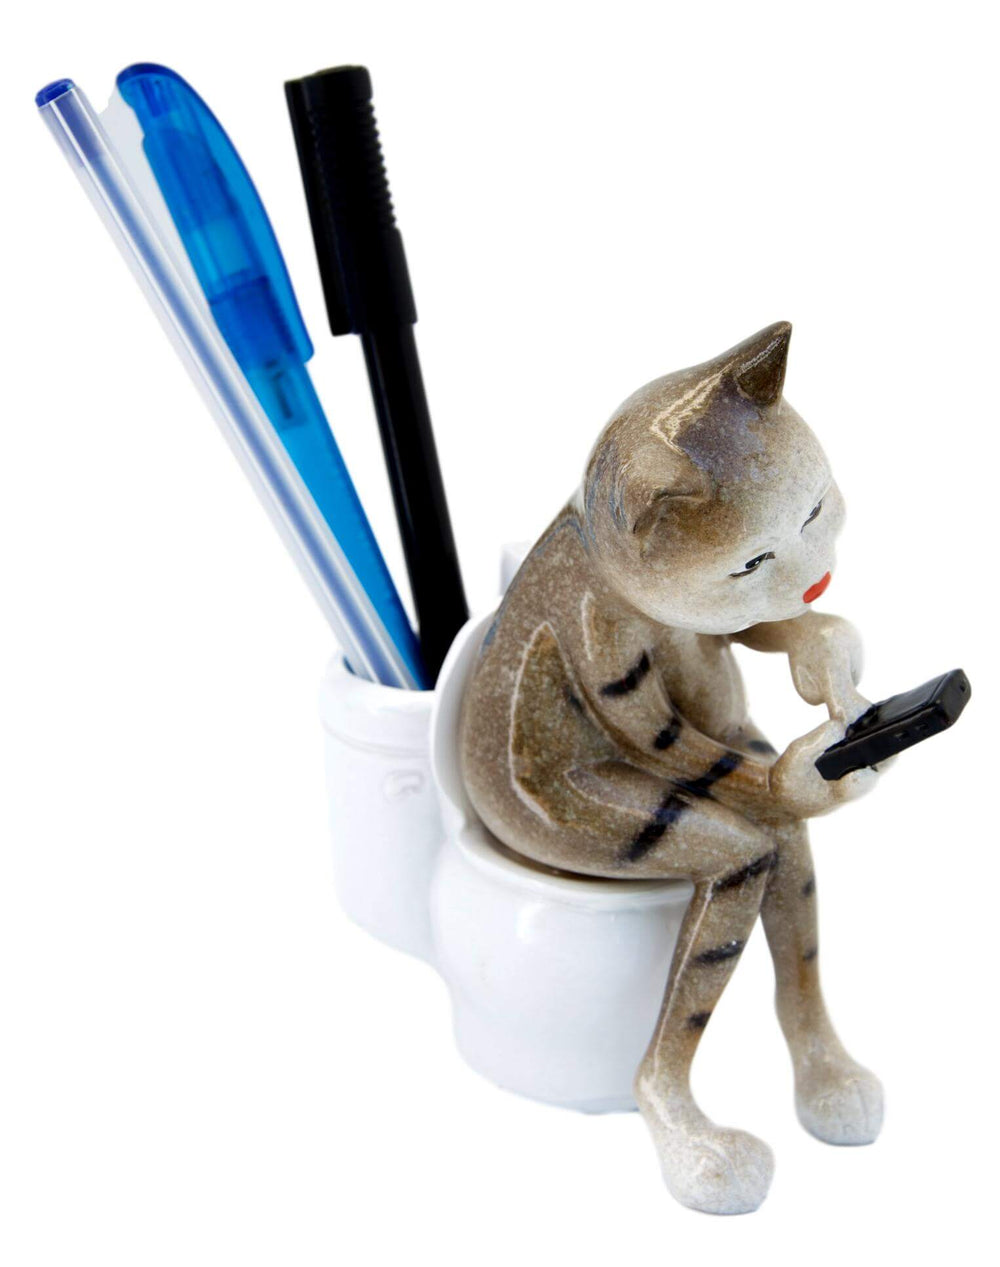 Trio of Ceramic Fun Cat Ornaments 'Selfie', 'Texting' and 'Running' - Gift Set